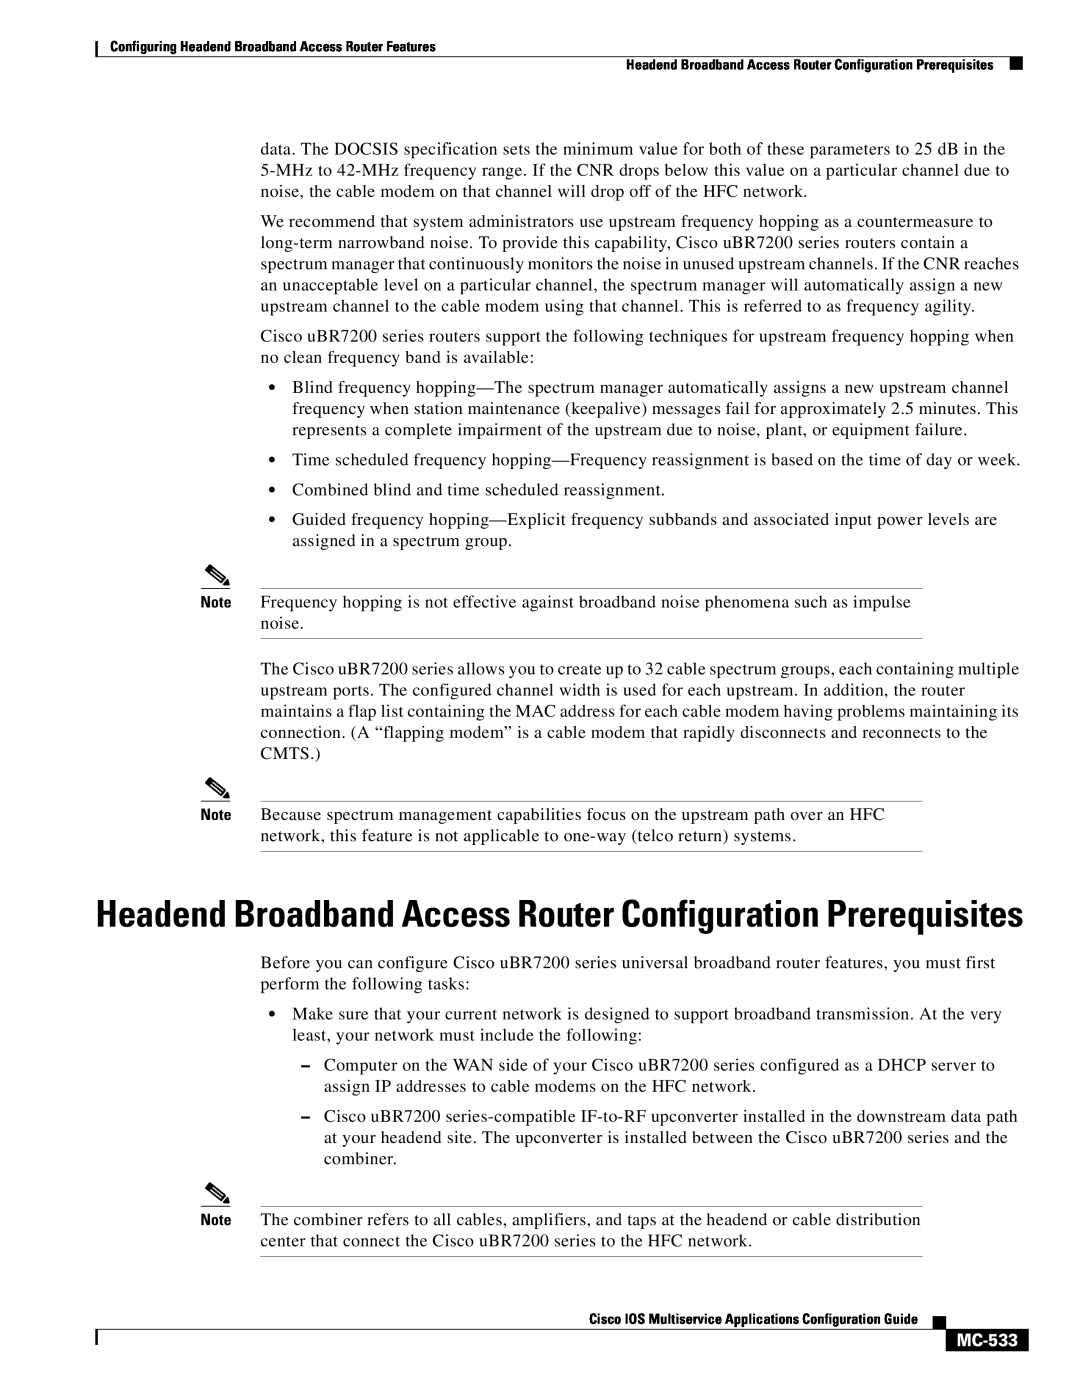 Cisco Systems uBR7200 manual MC-533, Headend Broadband Access Router Configuration Prerequisites 